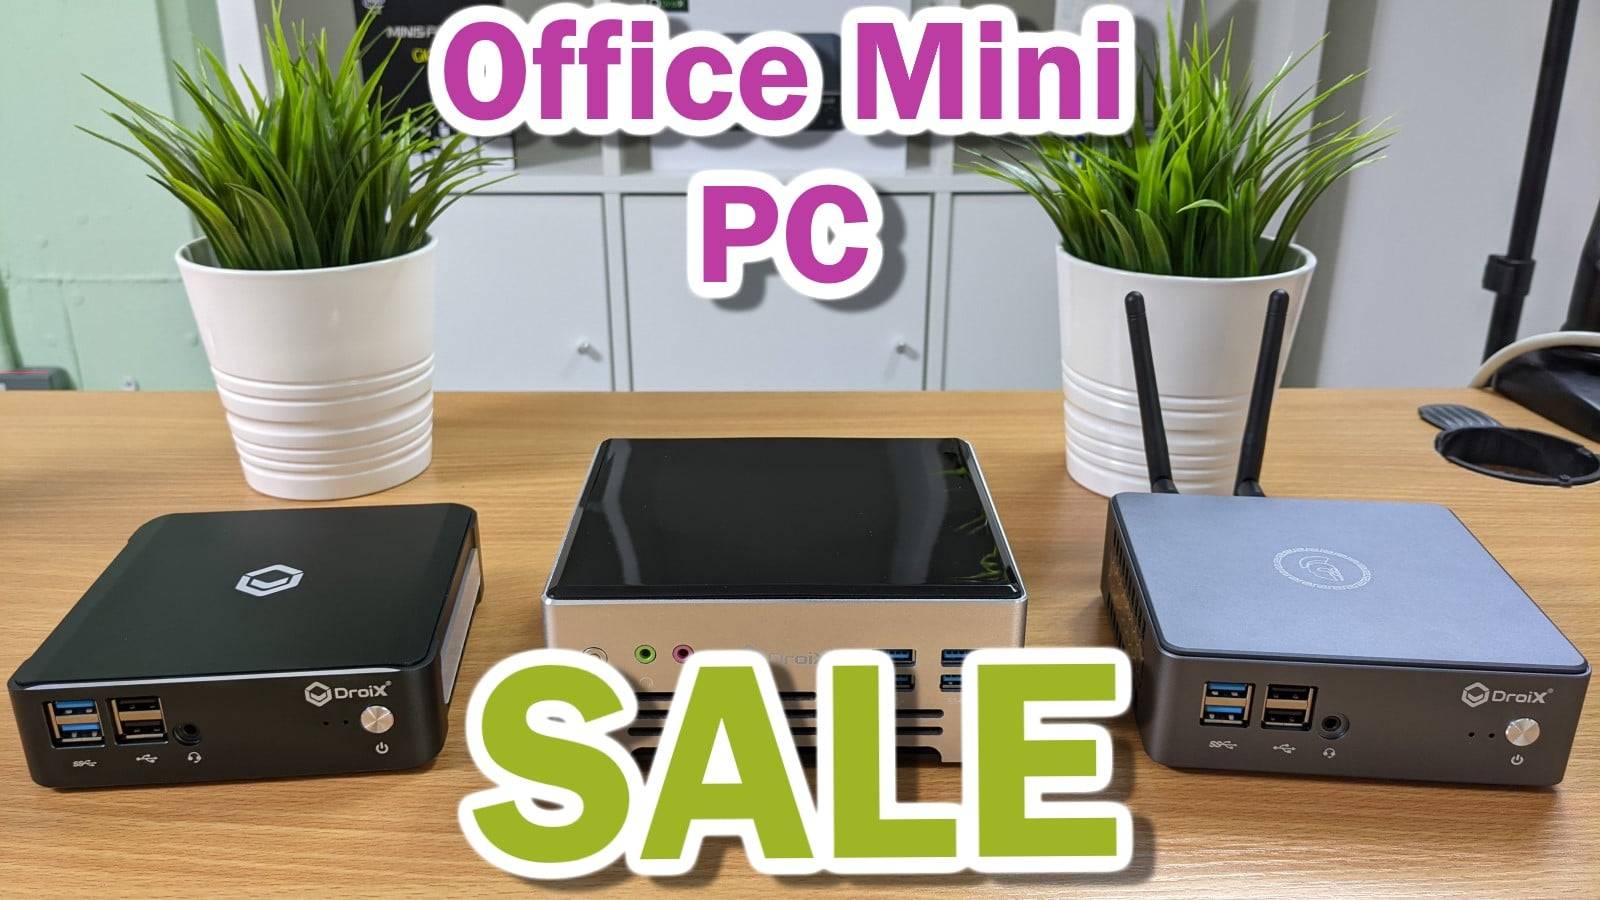 Office Mini PC Sale Banner